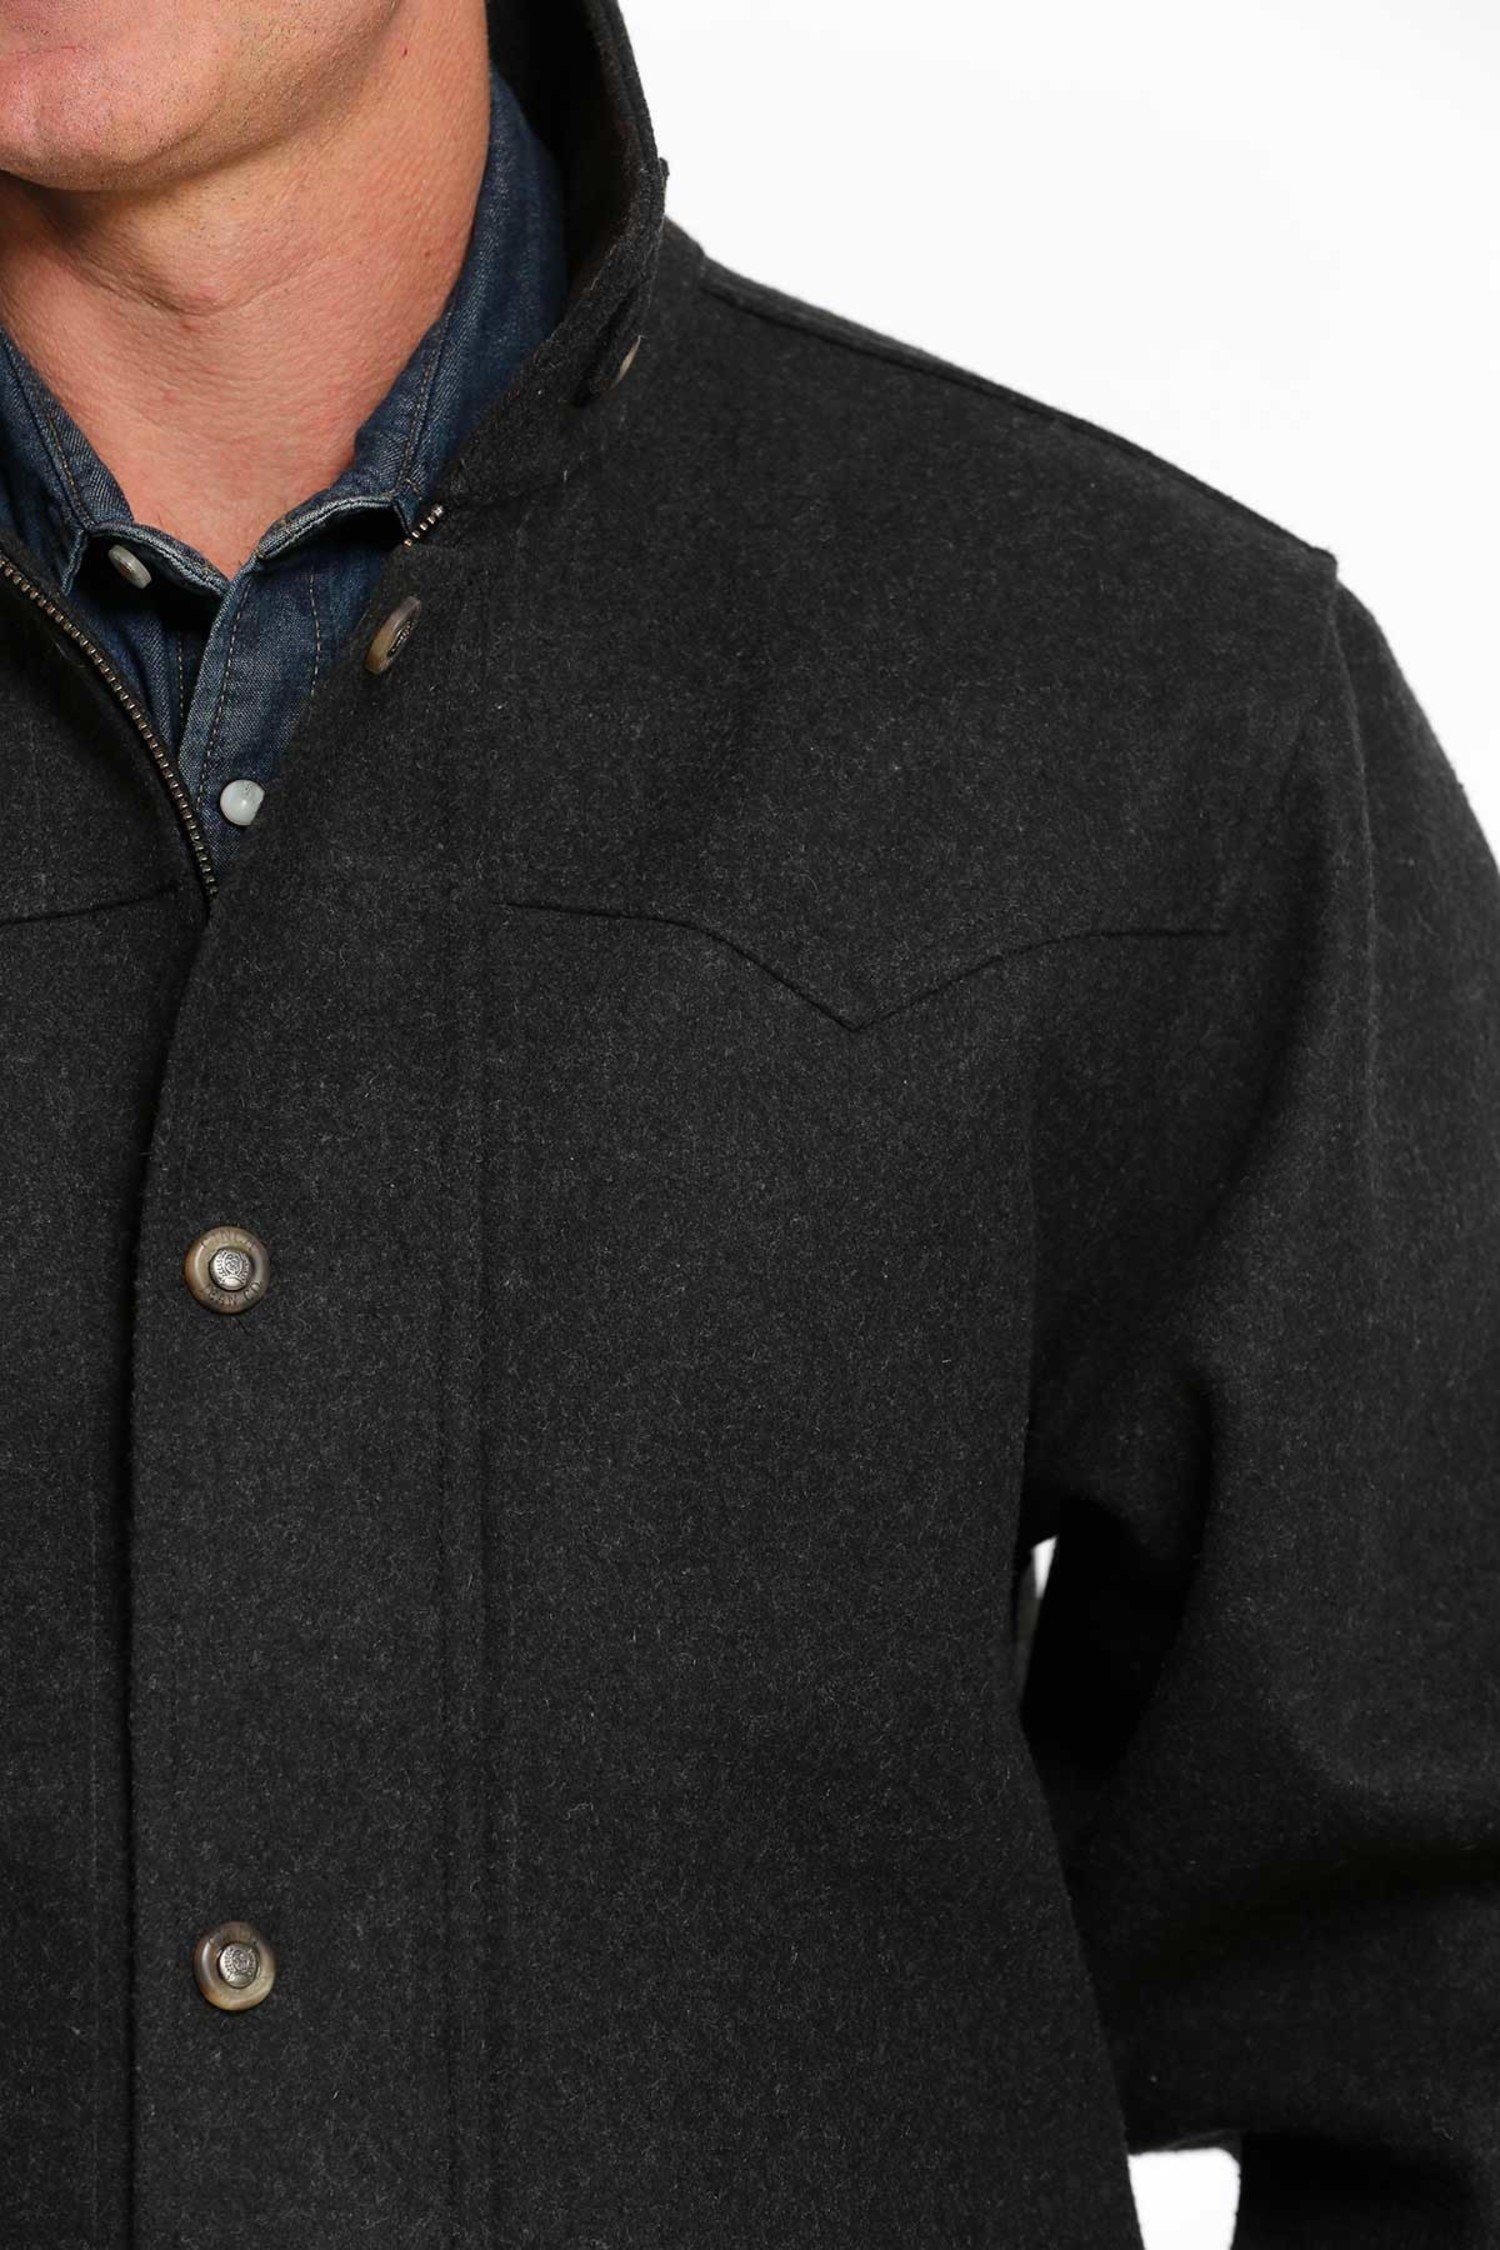 Coated Wool Chore Jacket - Charcoal